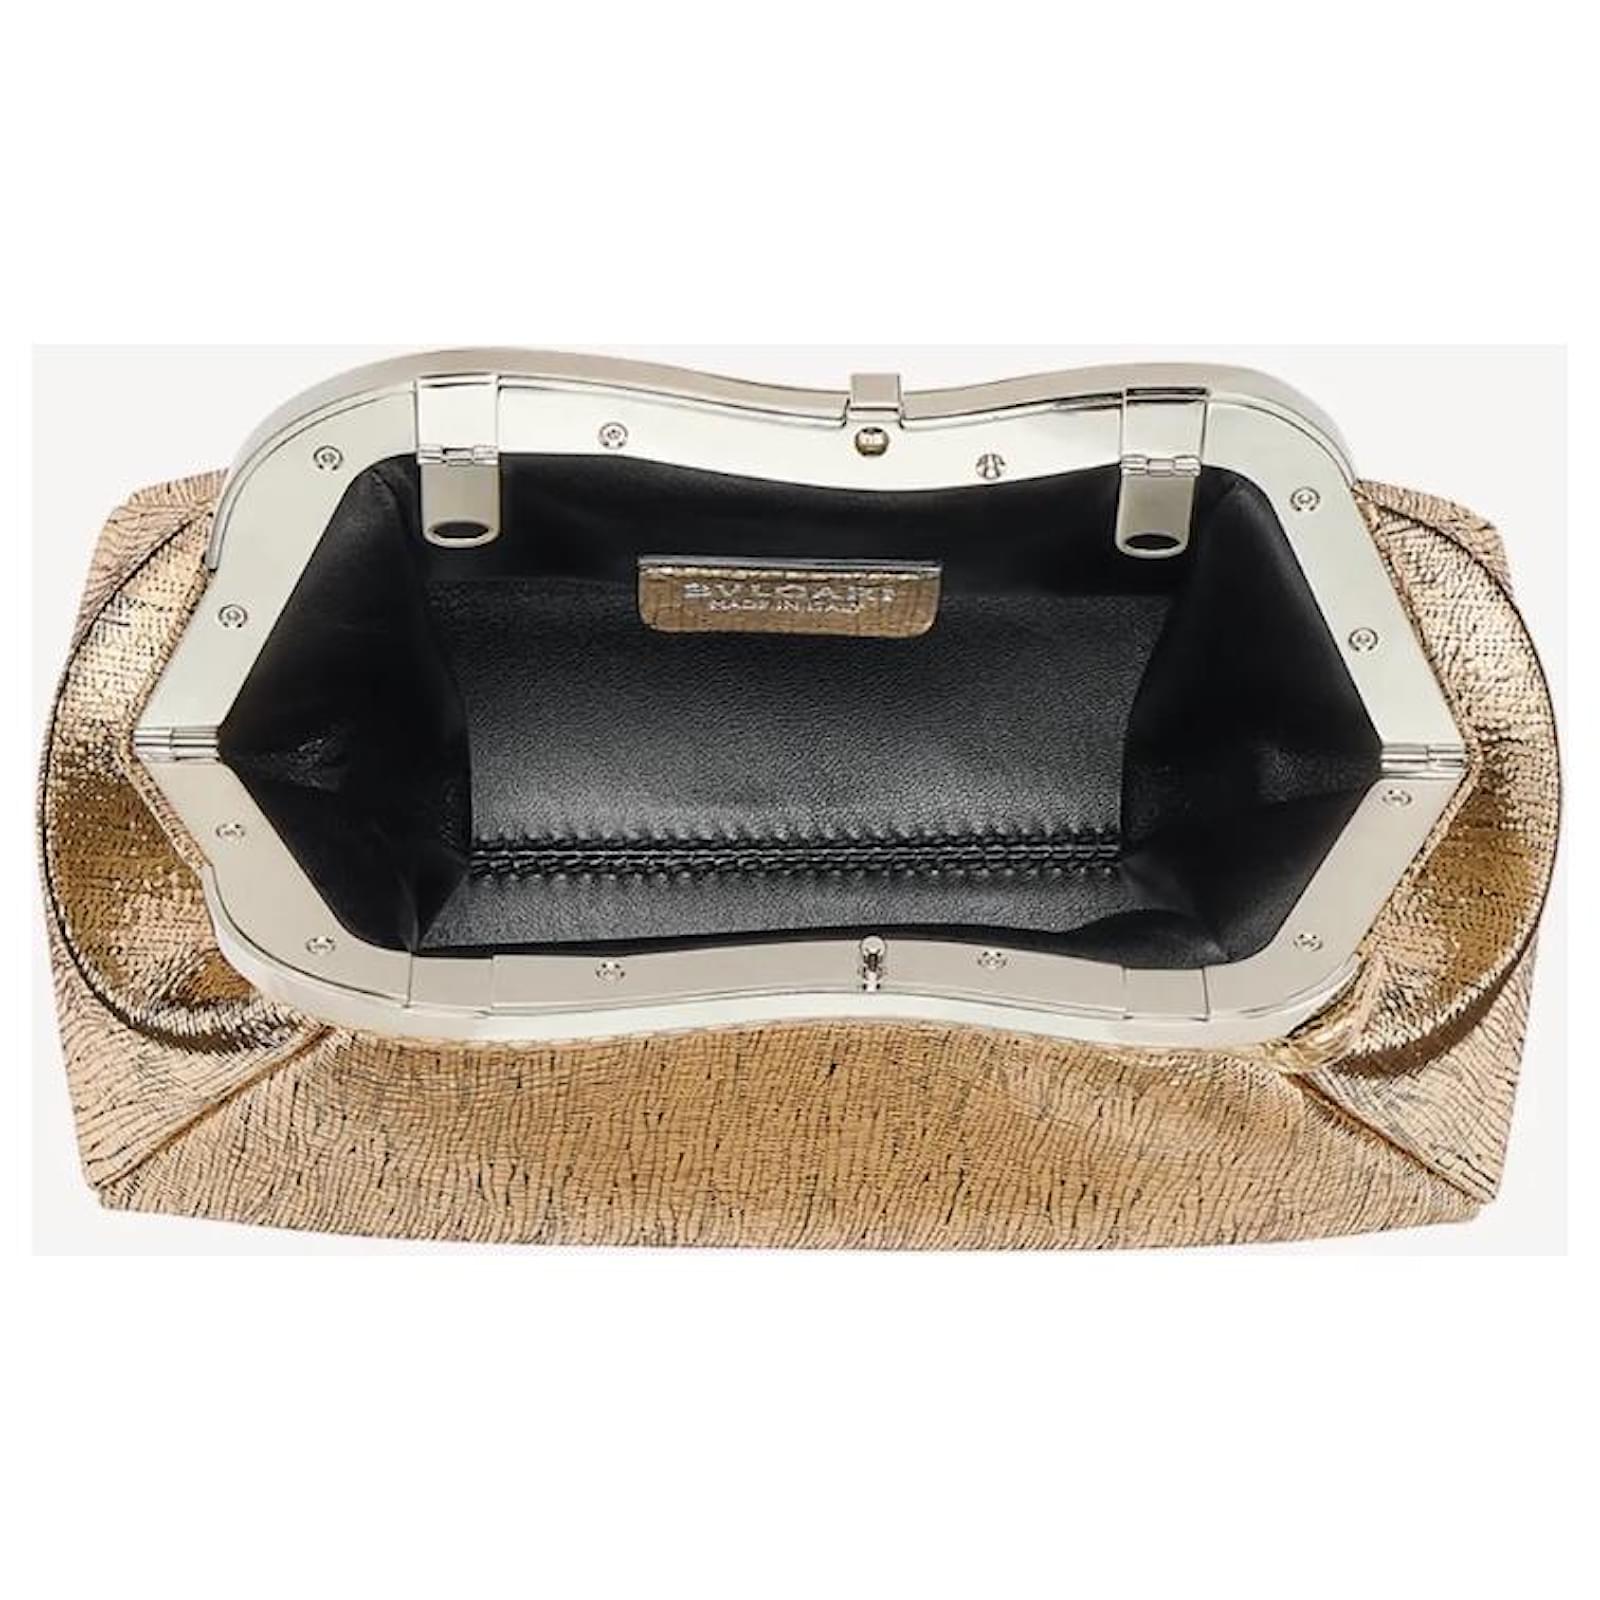 Serpenti leather handbag Bvlgari Gold in Leather - 35299249